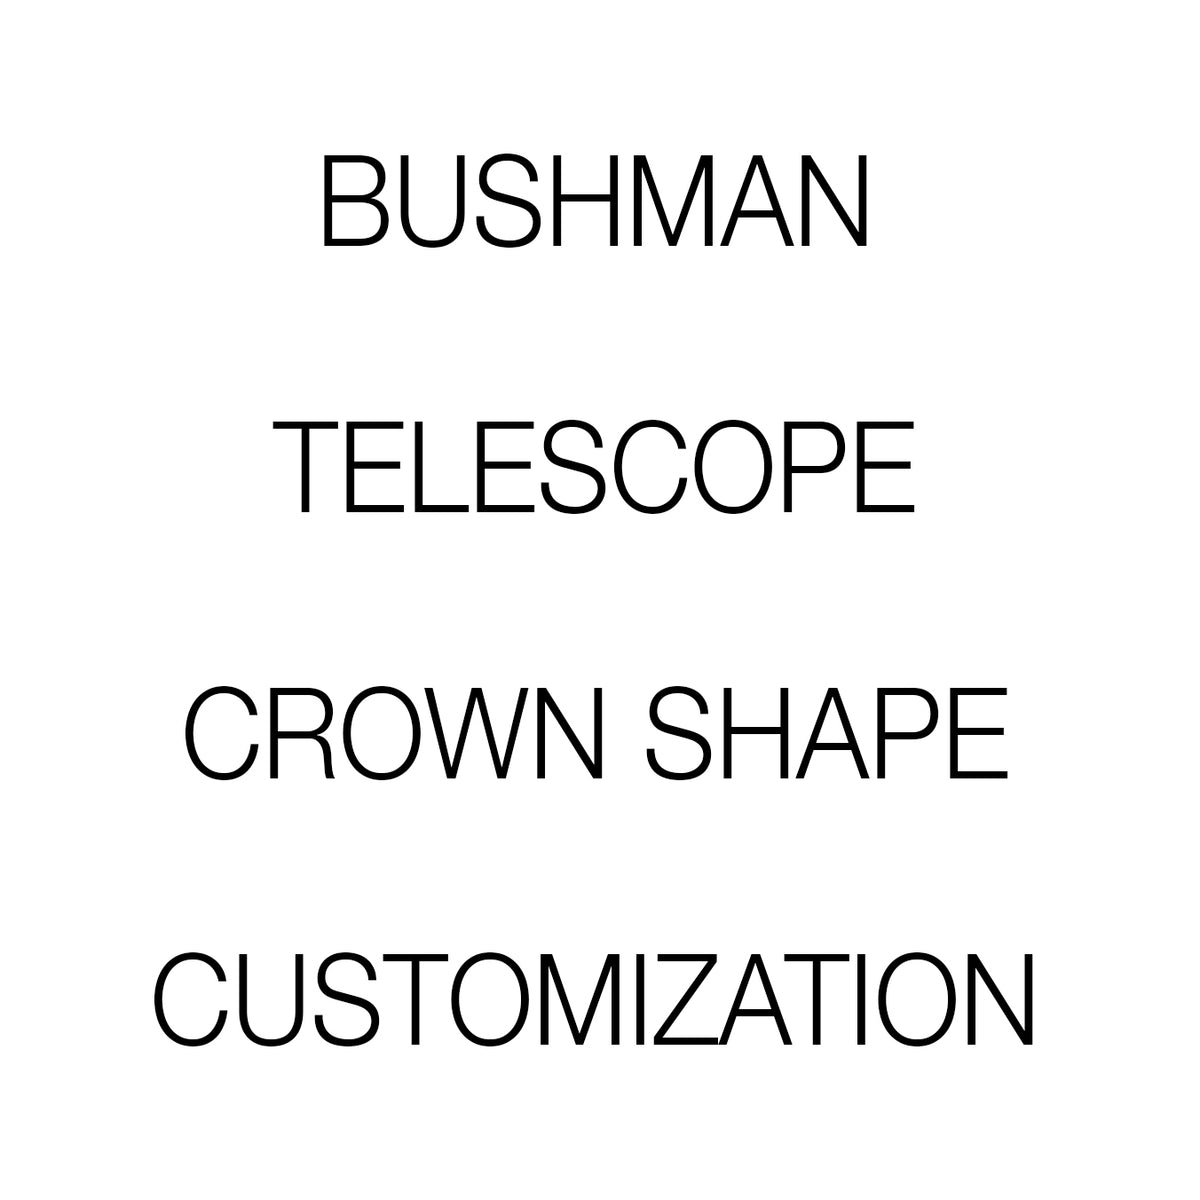 bushman ~ telescope shape customization